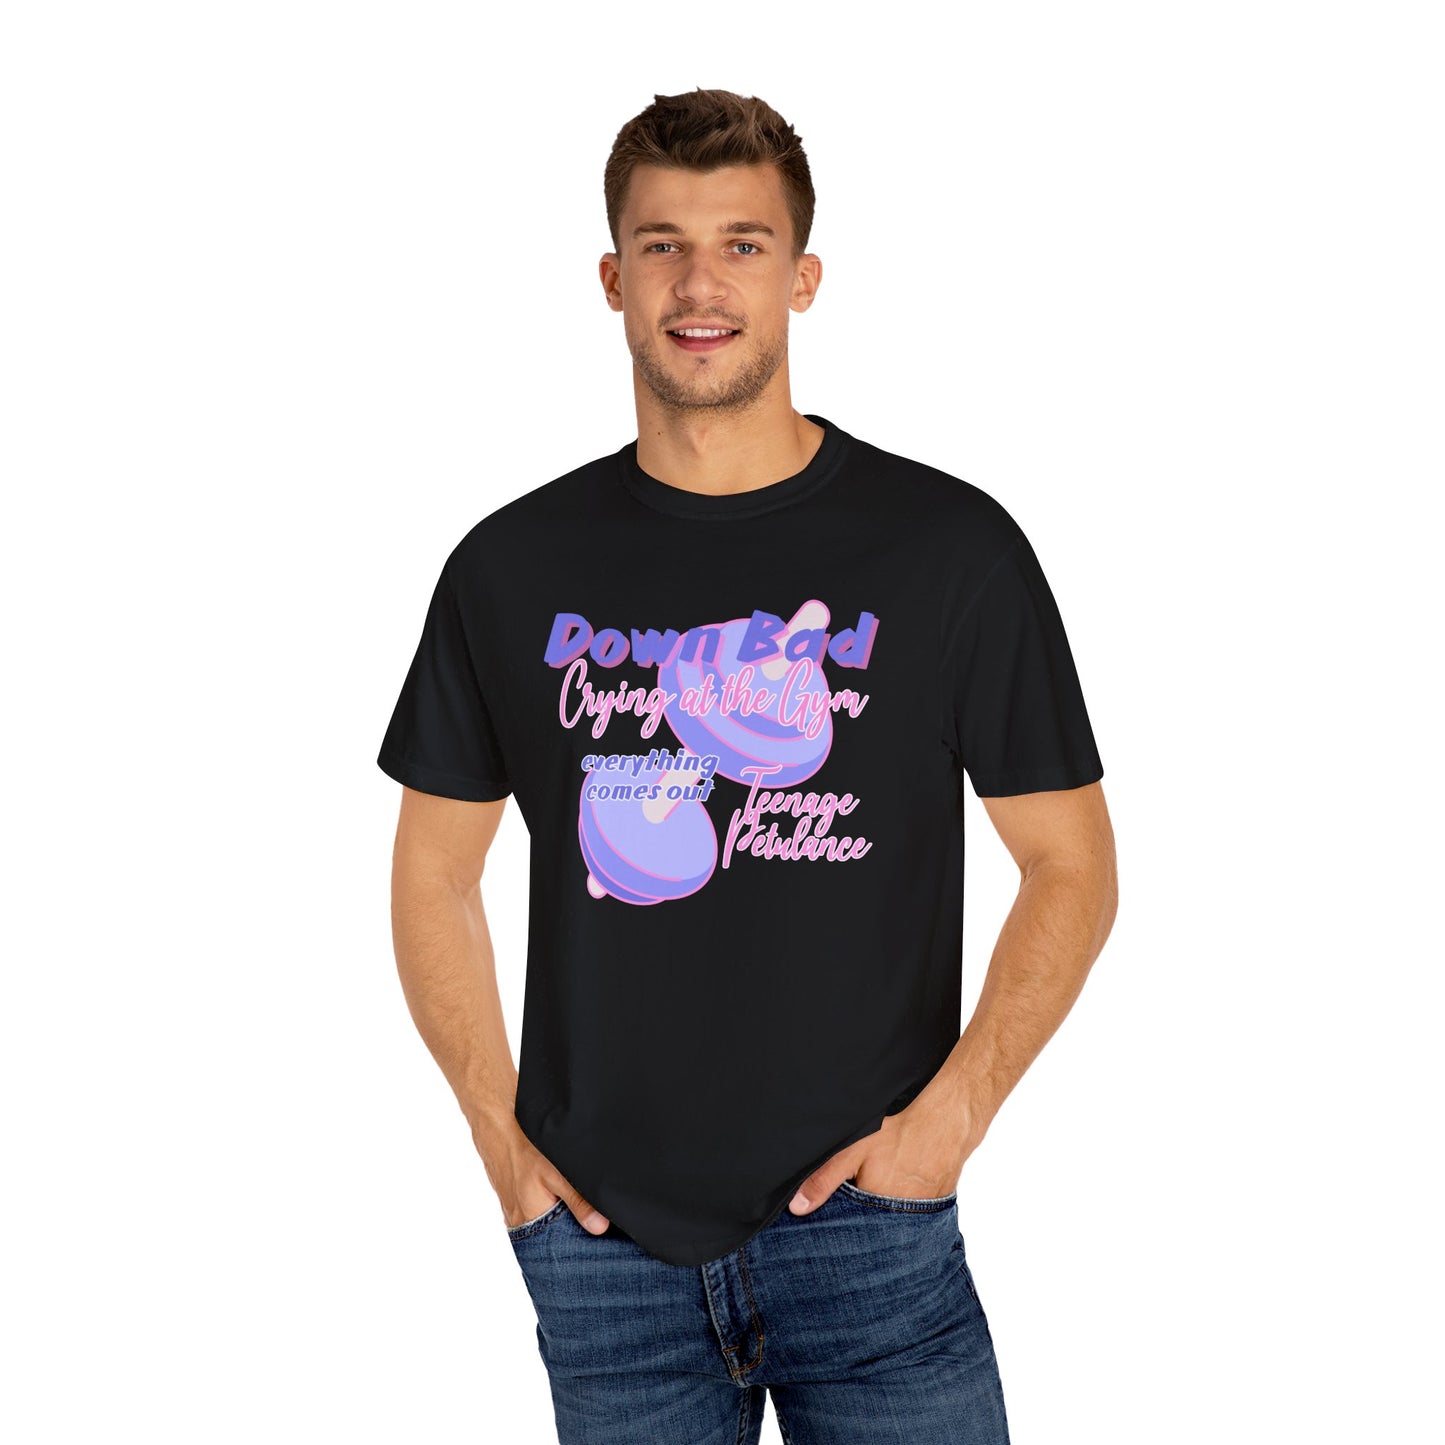 Down Bad Teenage Petulance Garment-Dyed T-shirt